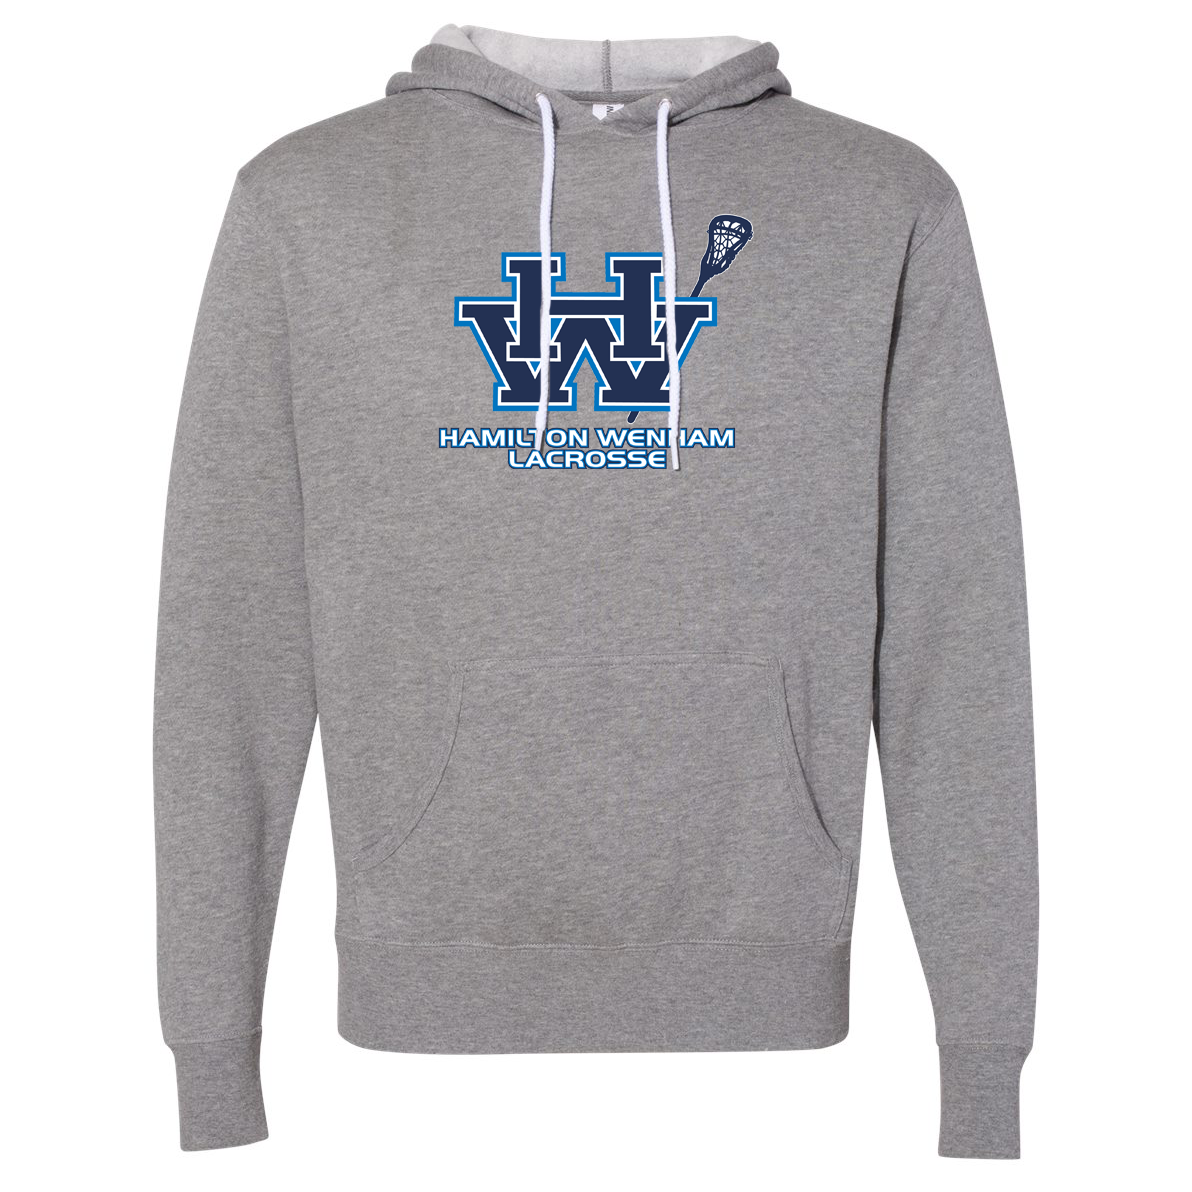 Hamilton Wenham Lacrosse Lightweight Hooded Sweatshirt